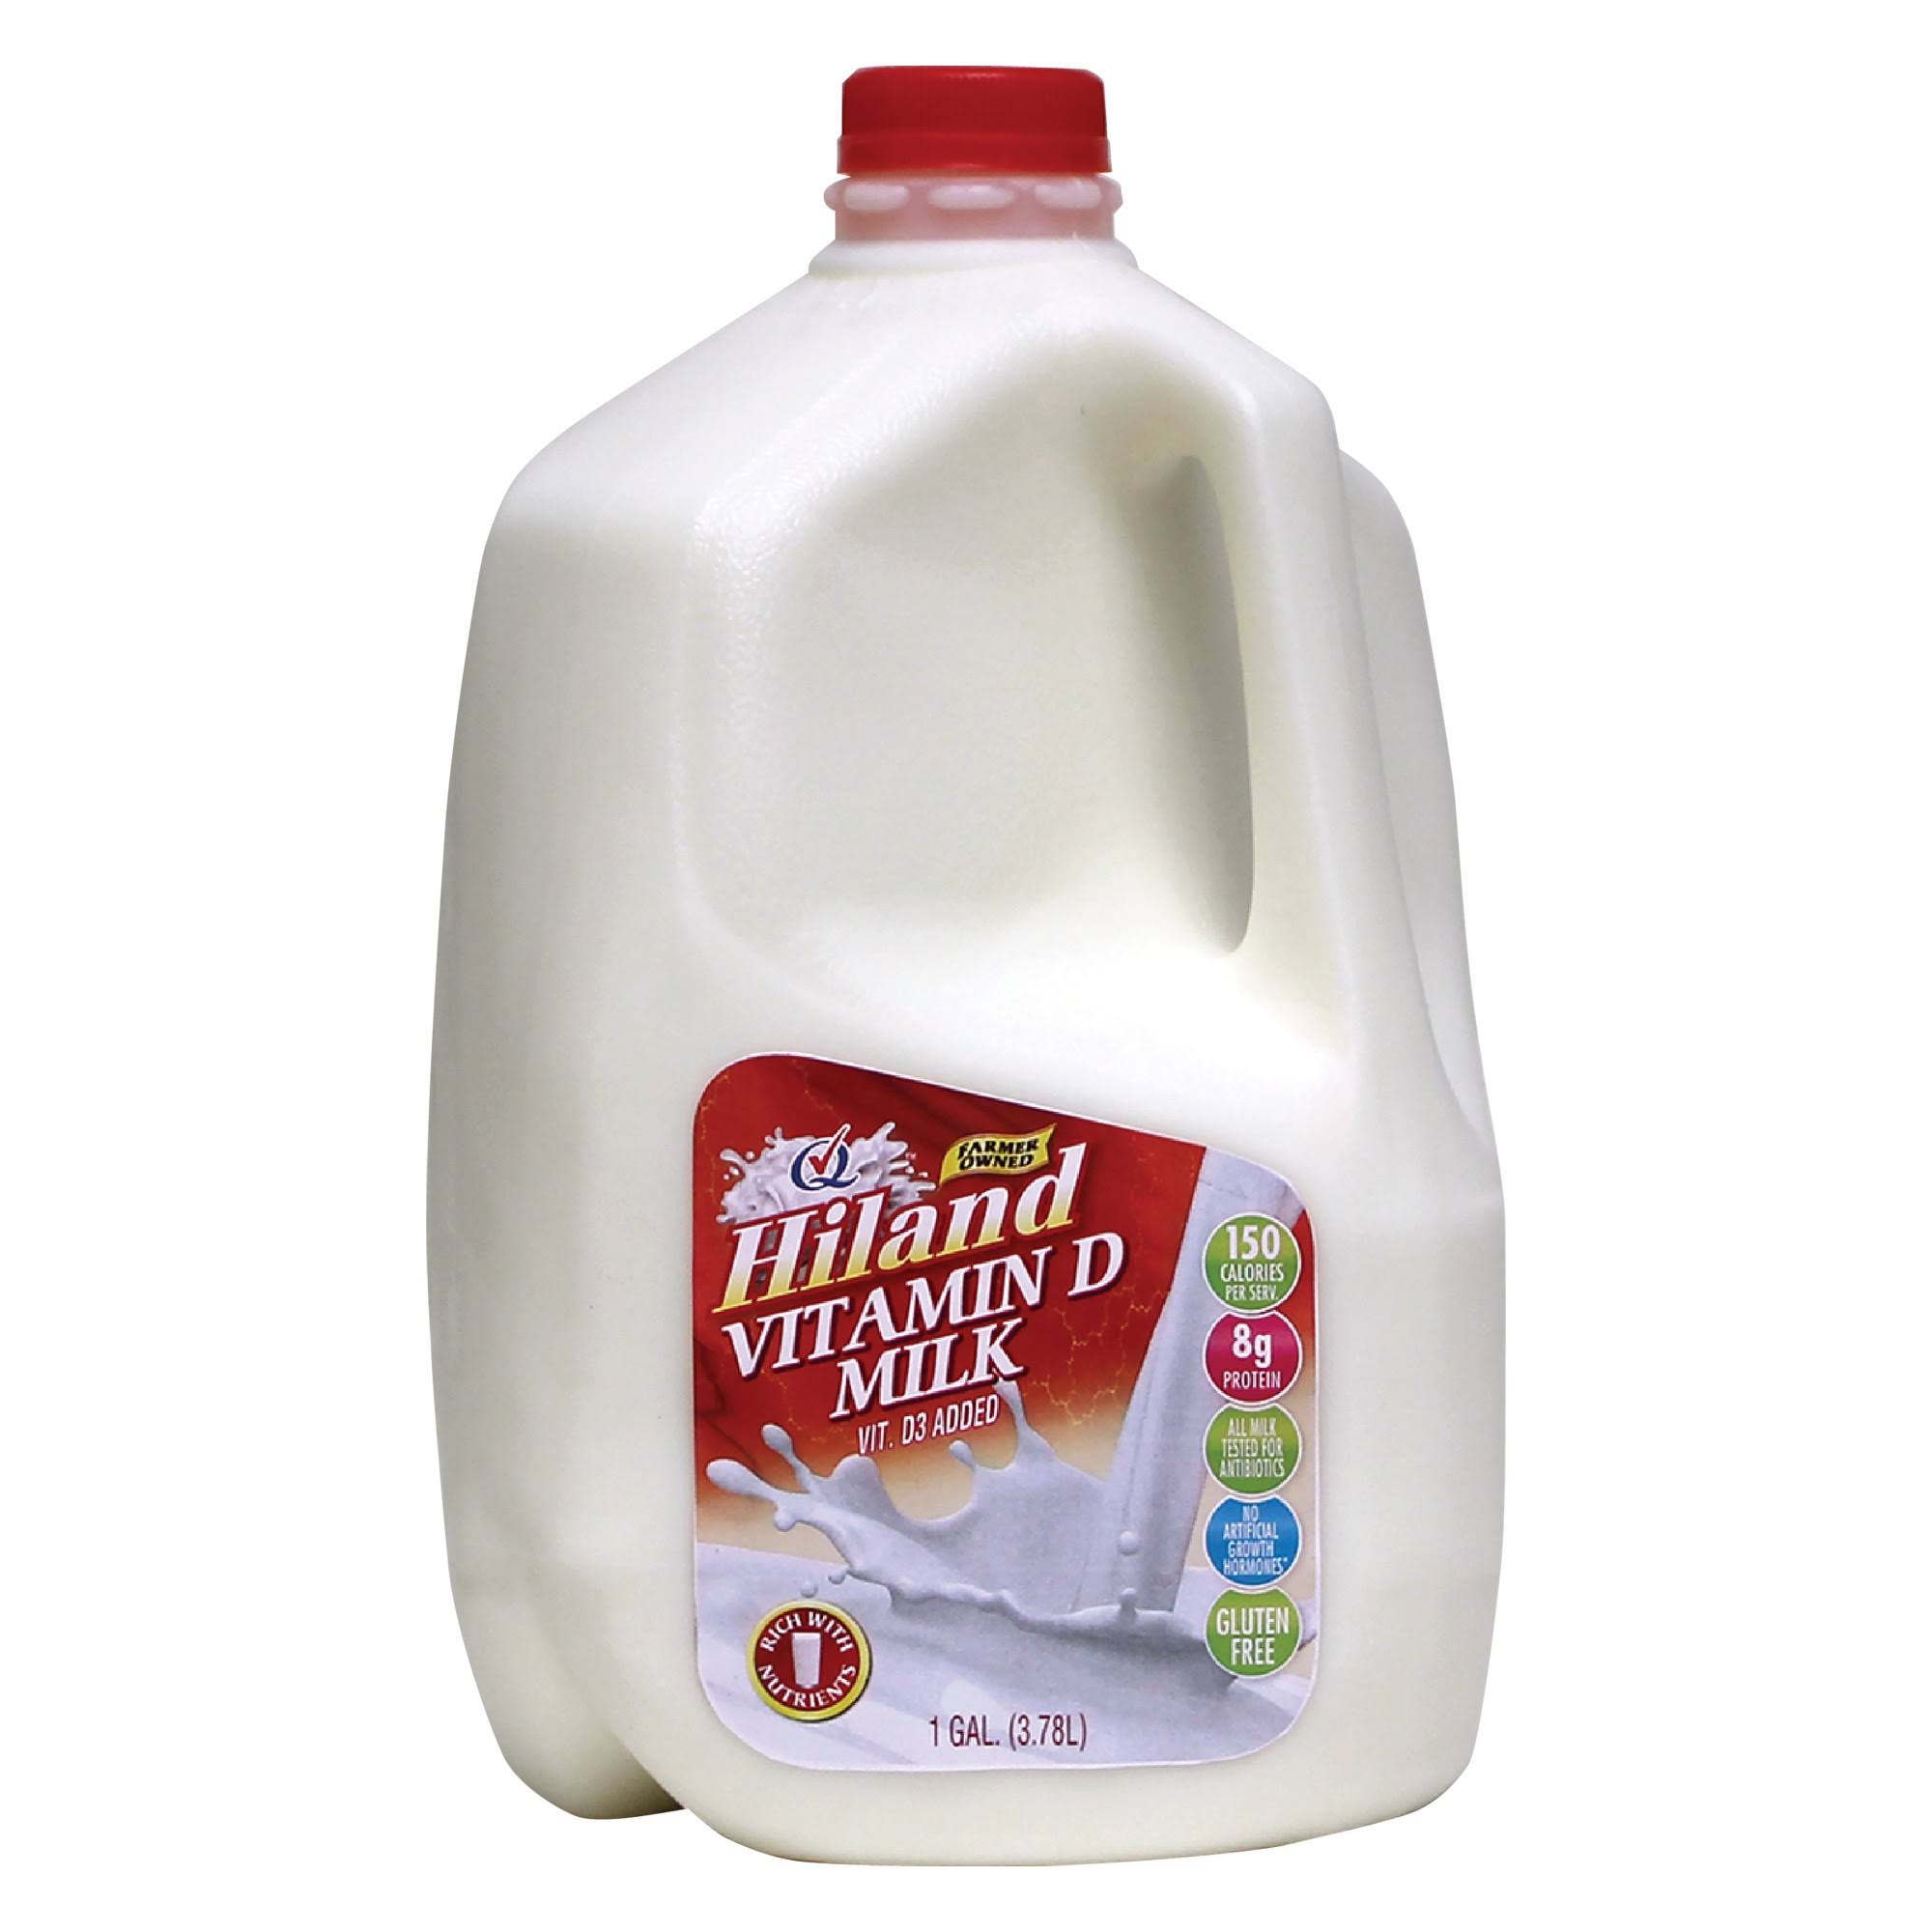 Hiland Vitamin D Milk - 1gal